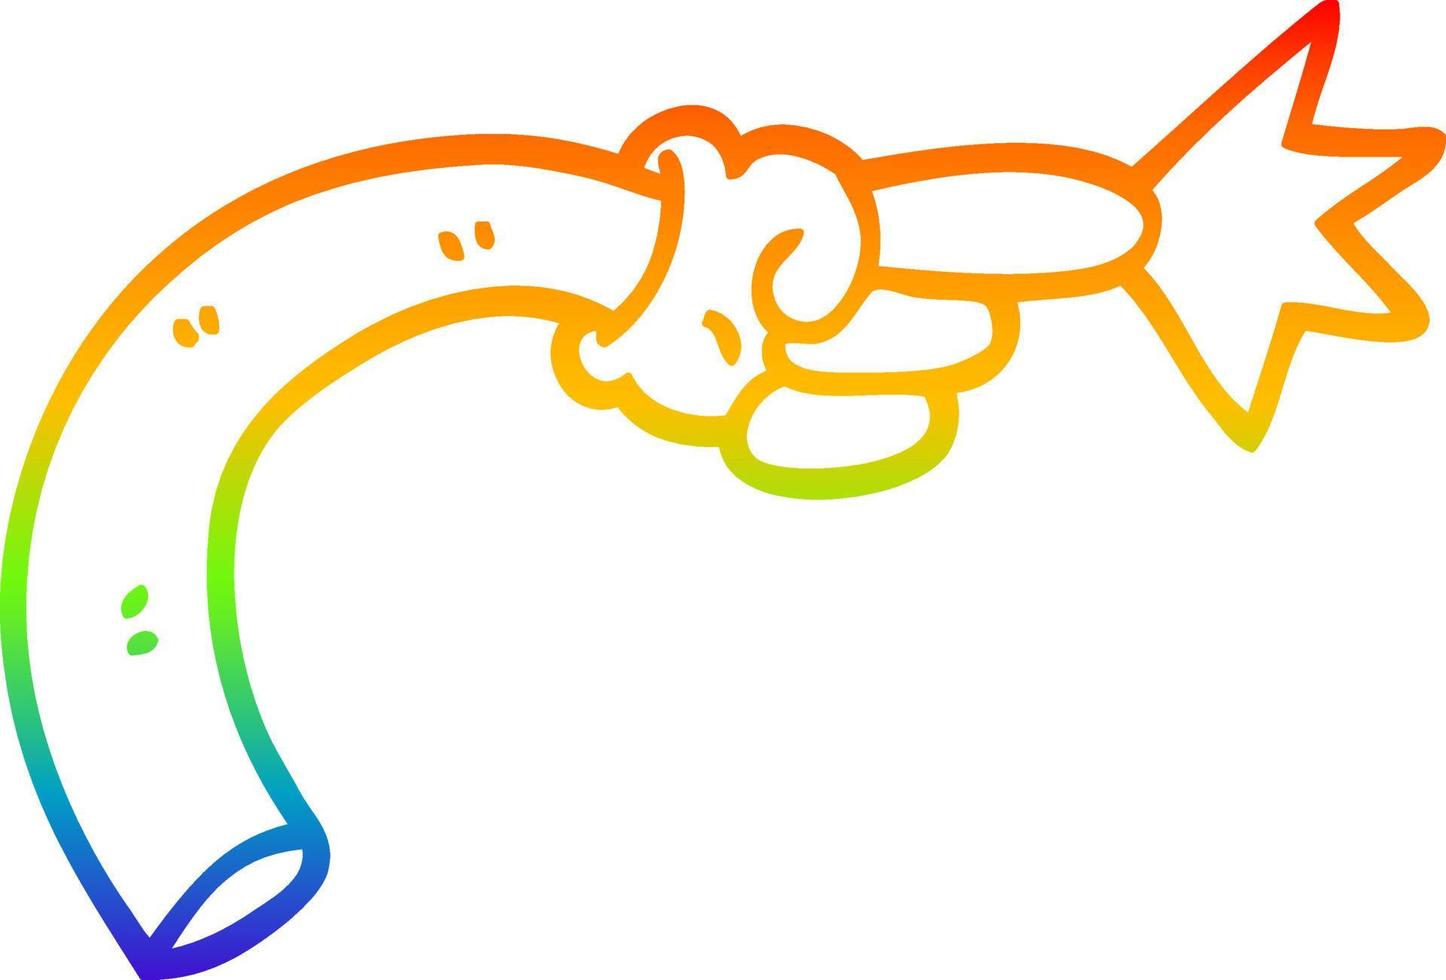 regenboog gradiënt lijntekening cartoon arm gebaar vector